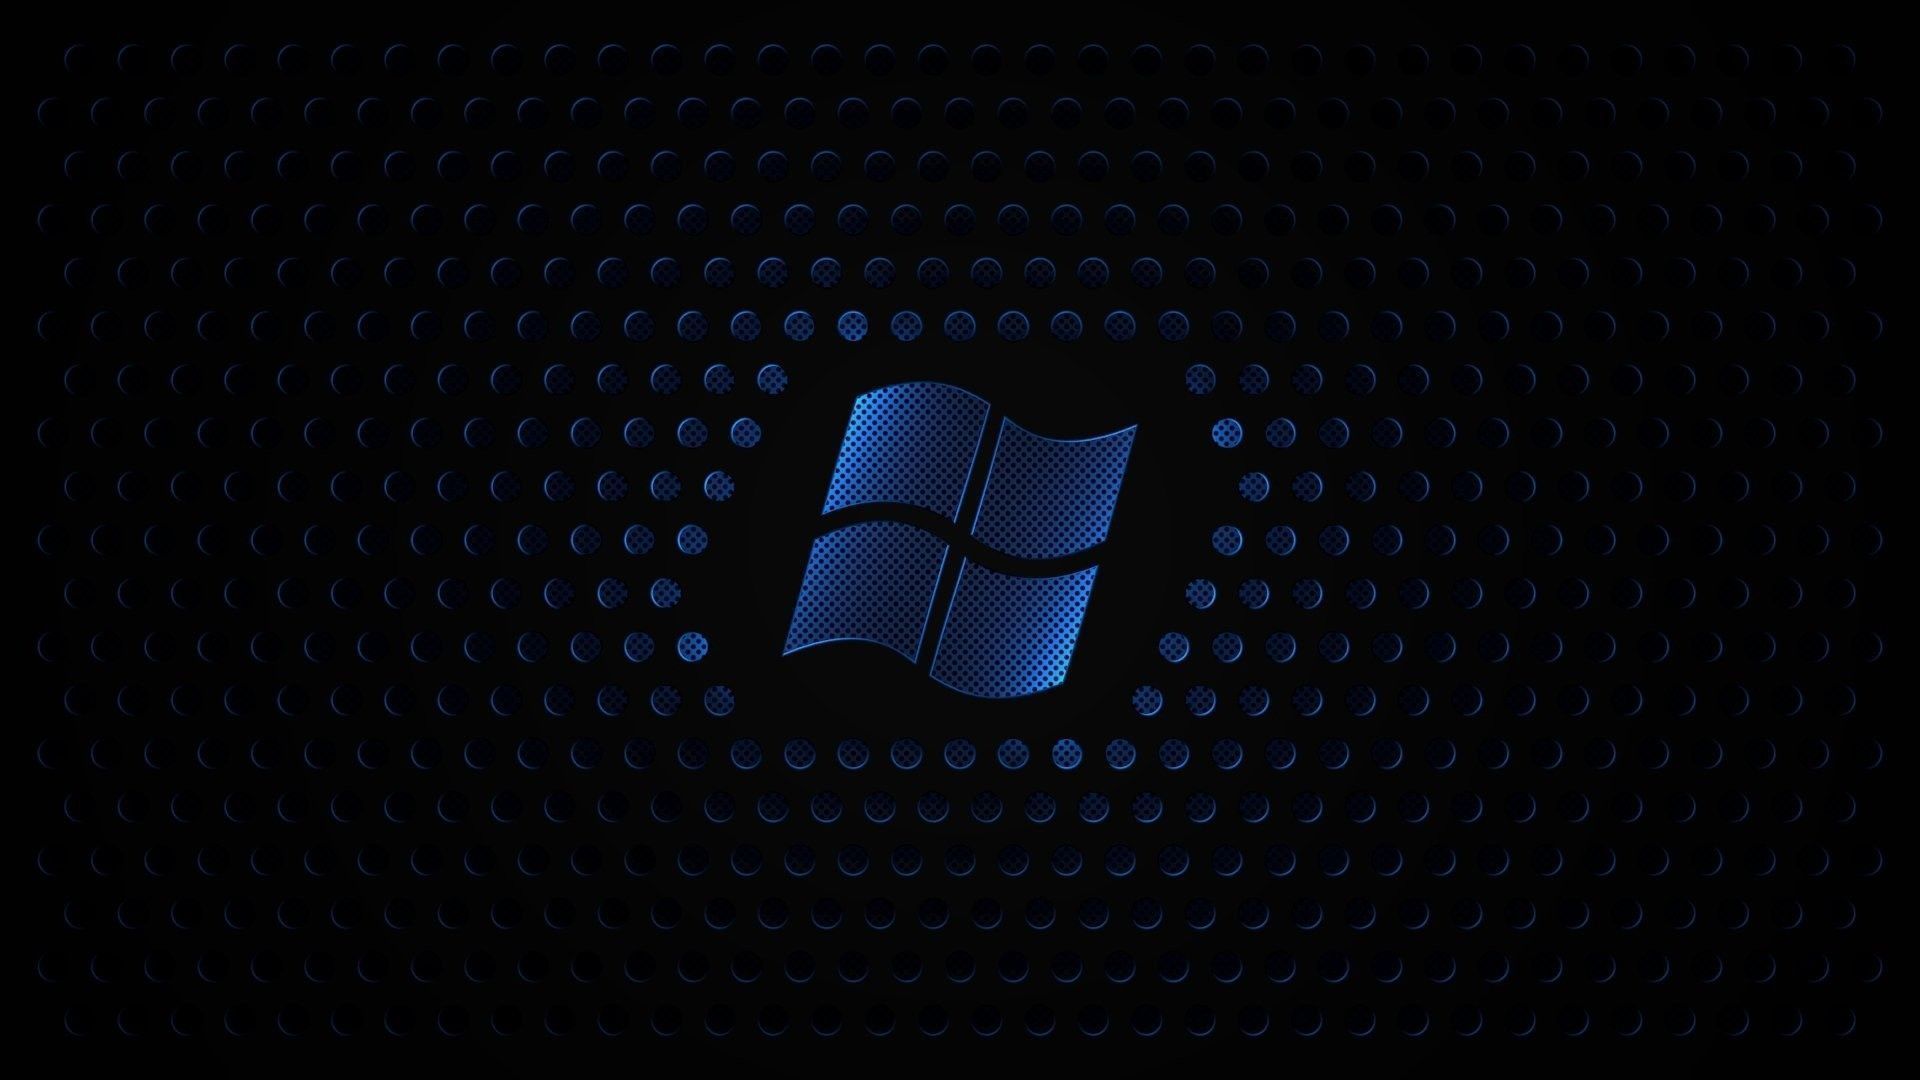 hd wallpaper Windows Xp Microsoft Logos - Background Wallpapers ...